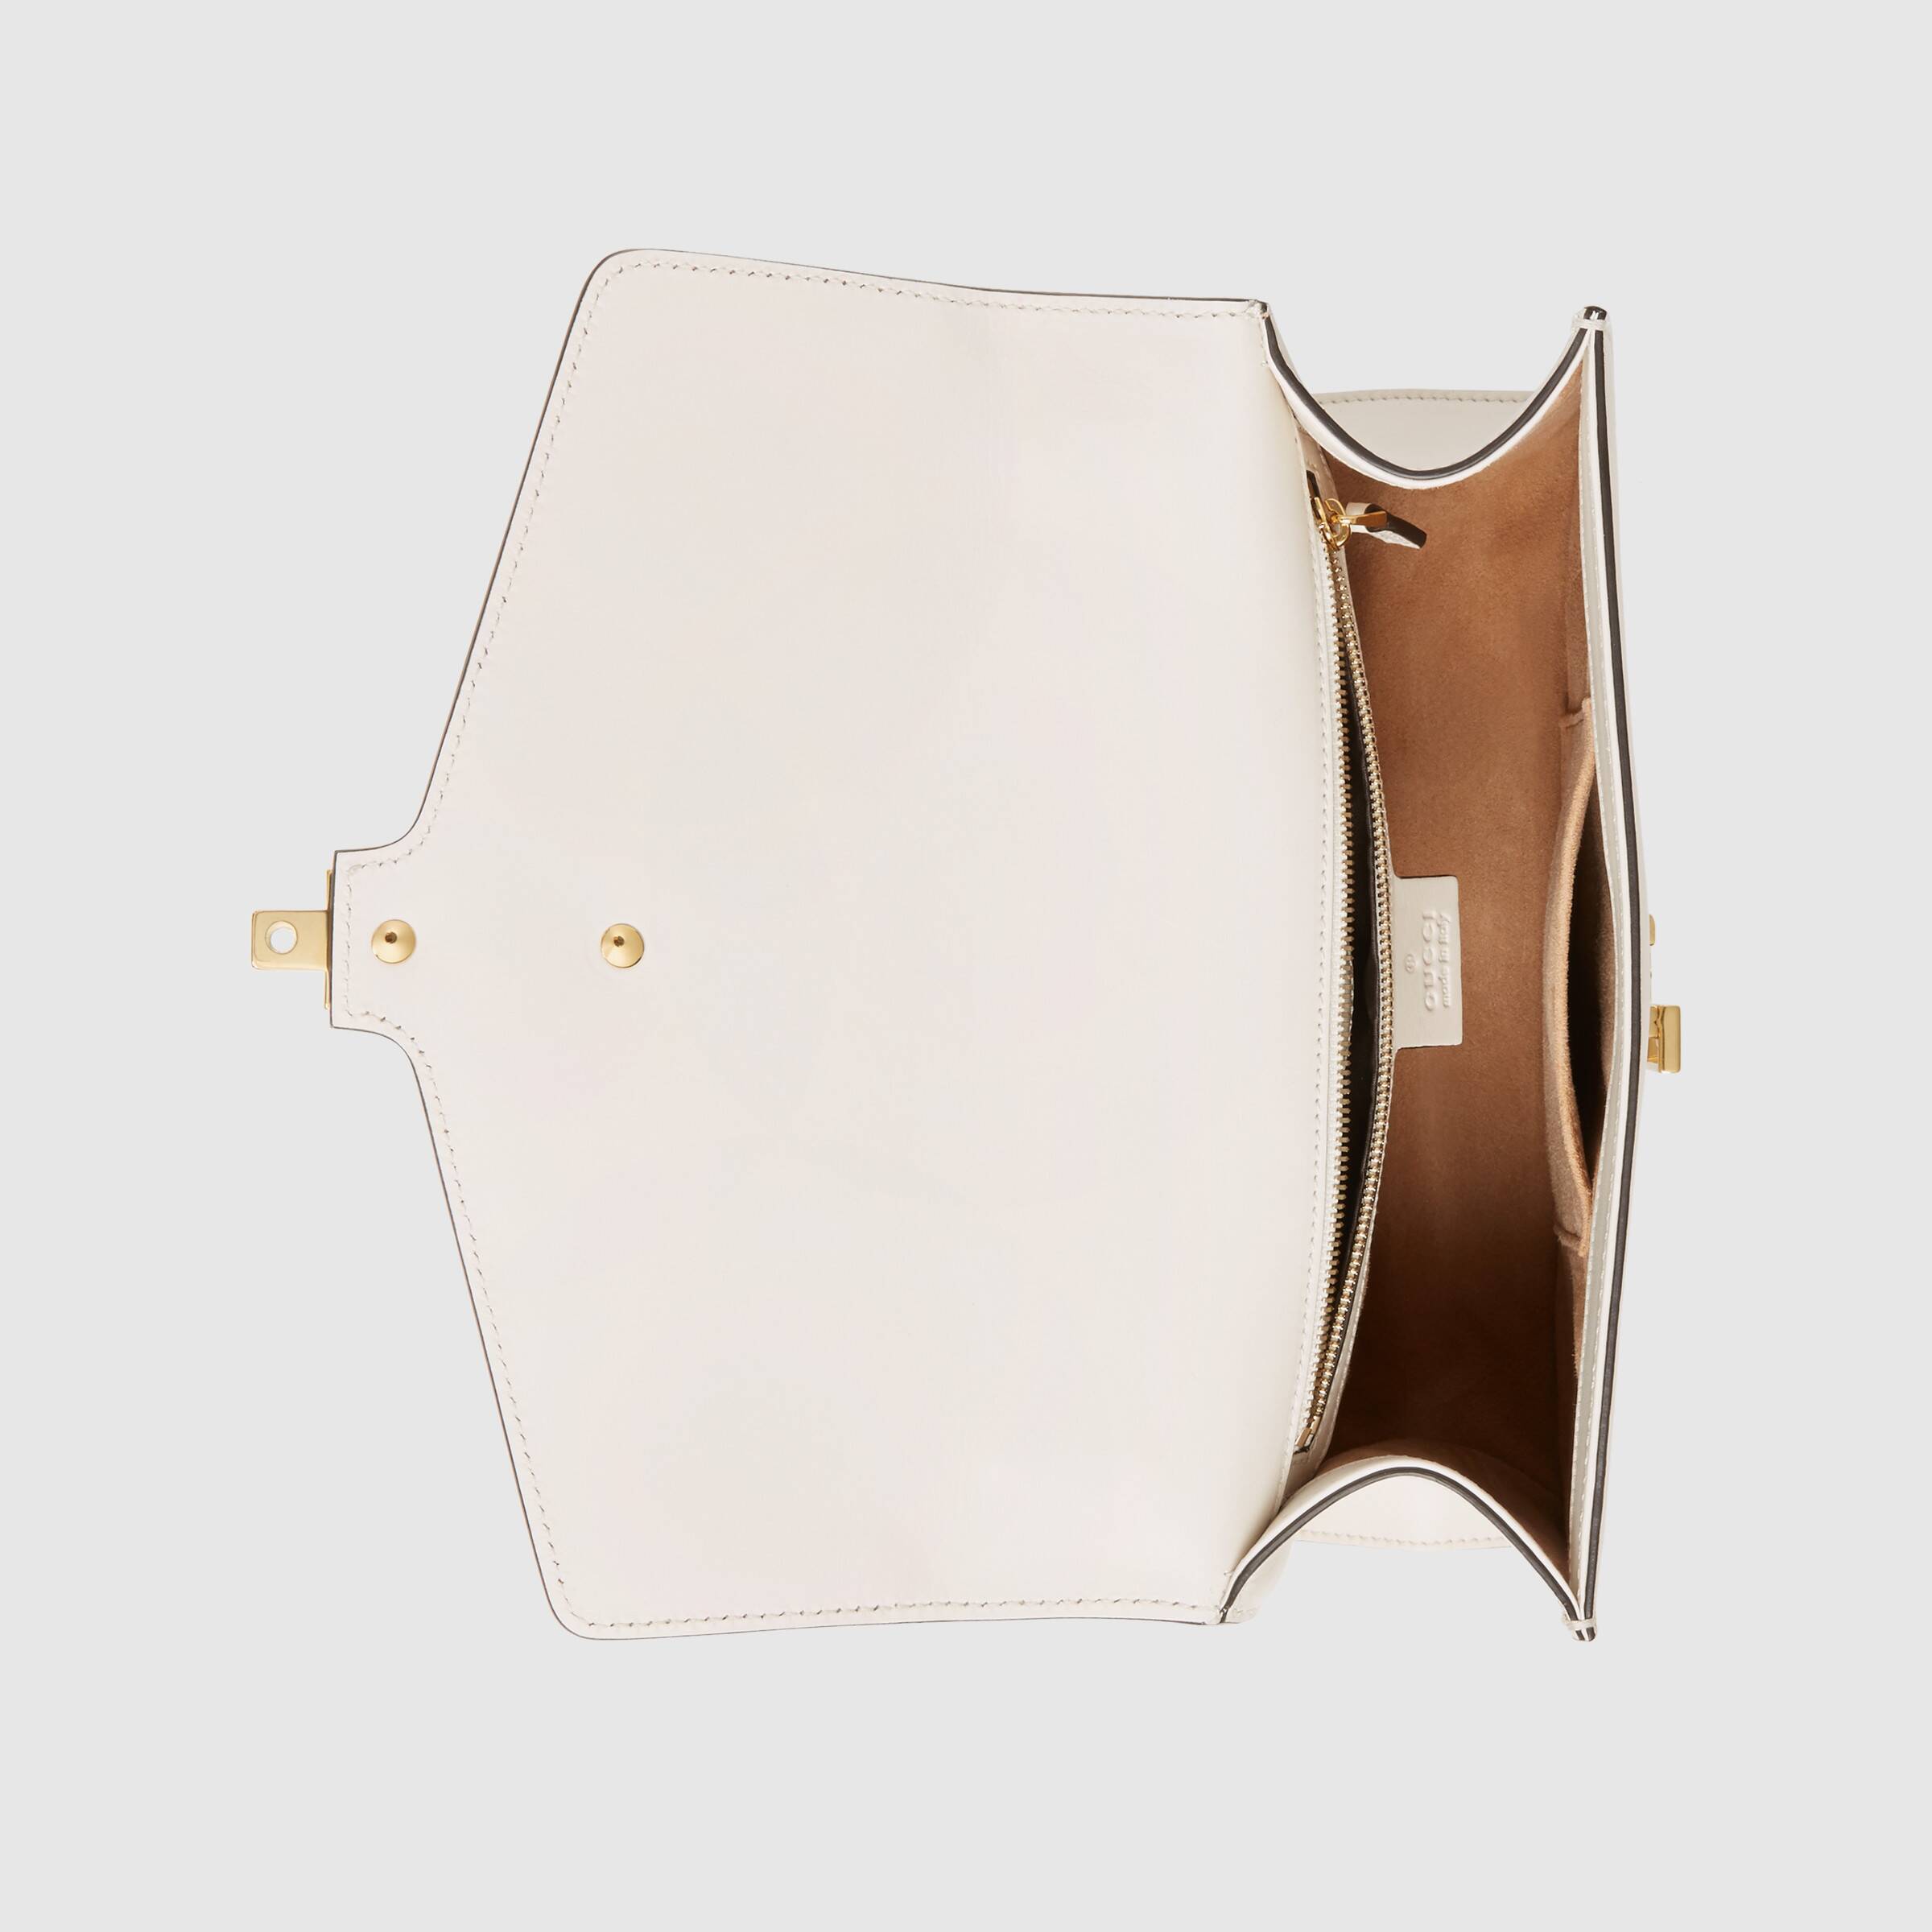 Gucci Sylvie Small Shoulder Bag Off-White